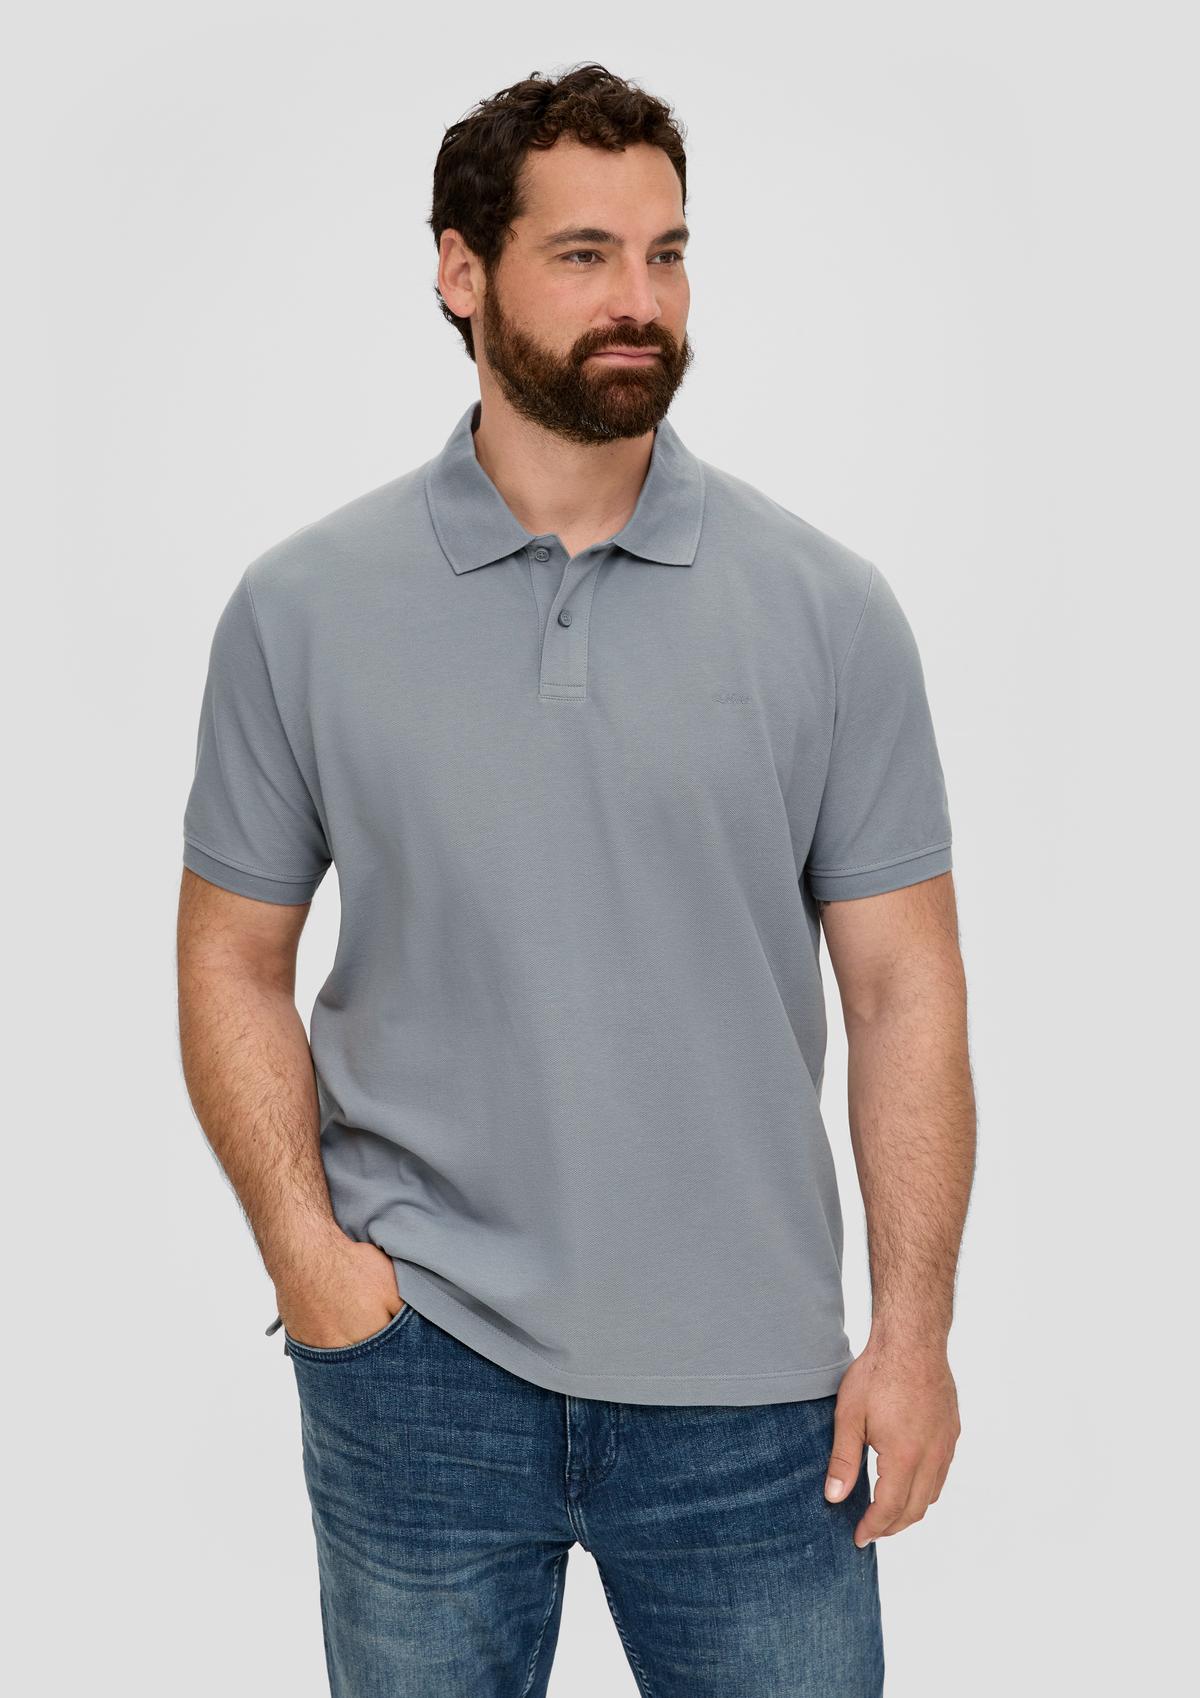 a Polo - shirt navy print with minimalist